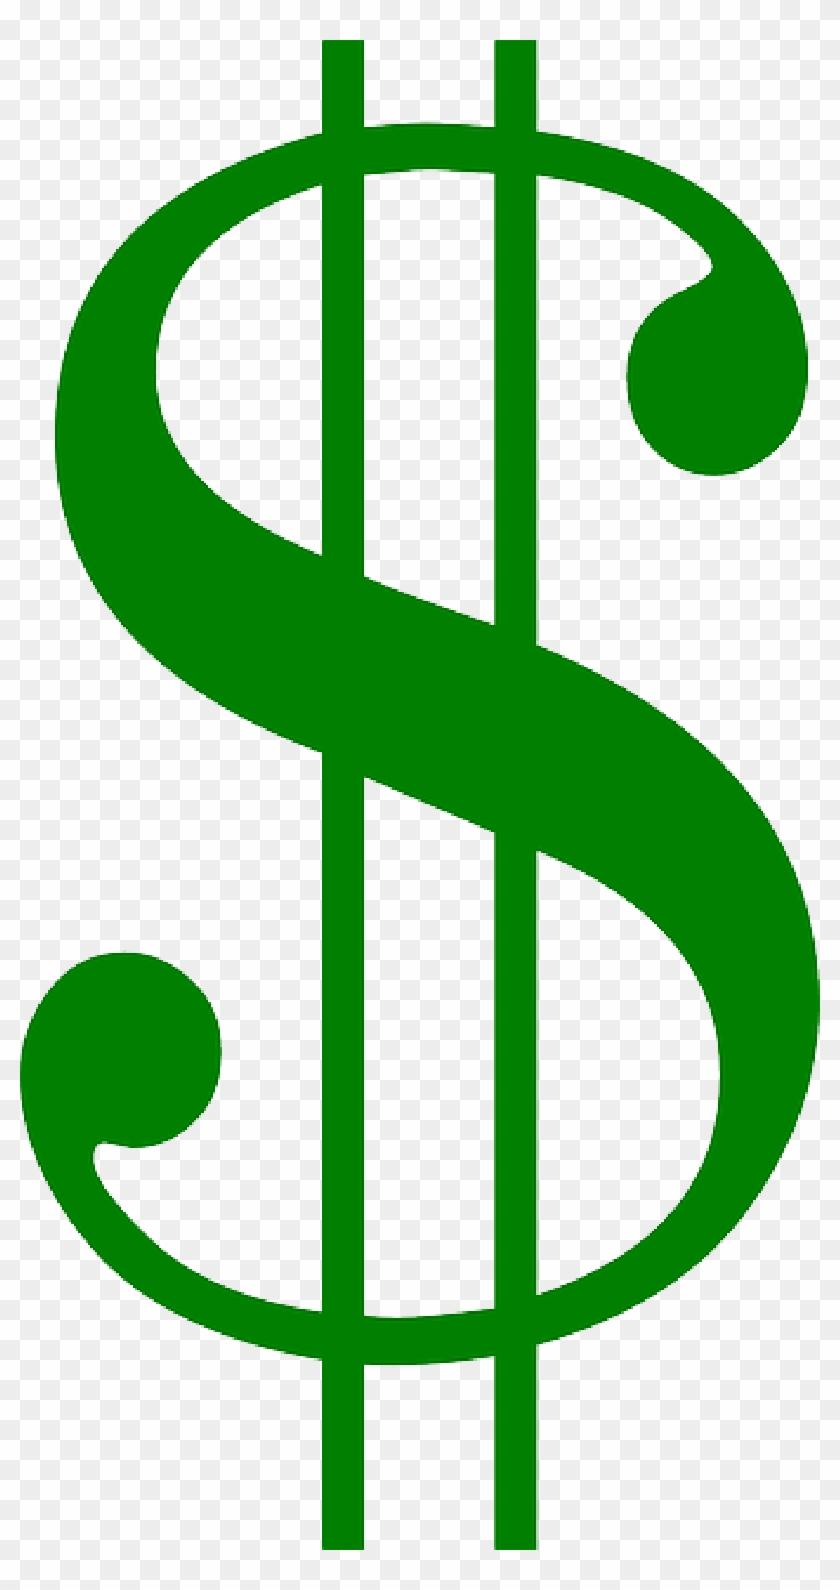 Green, Symbol, Signs, Money, Free, Dollar - Dollar Sign Clip Art #1060456